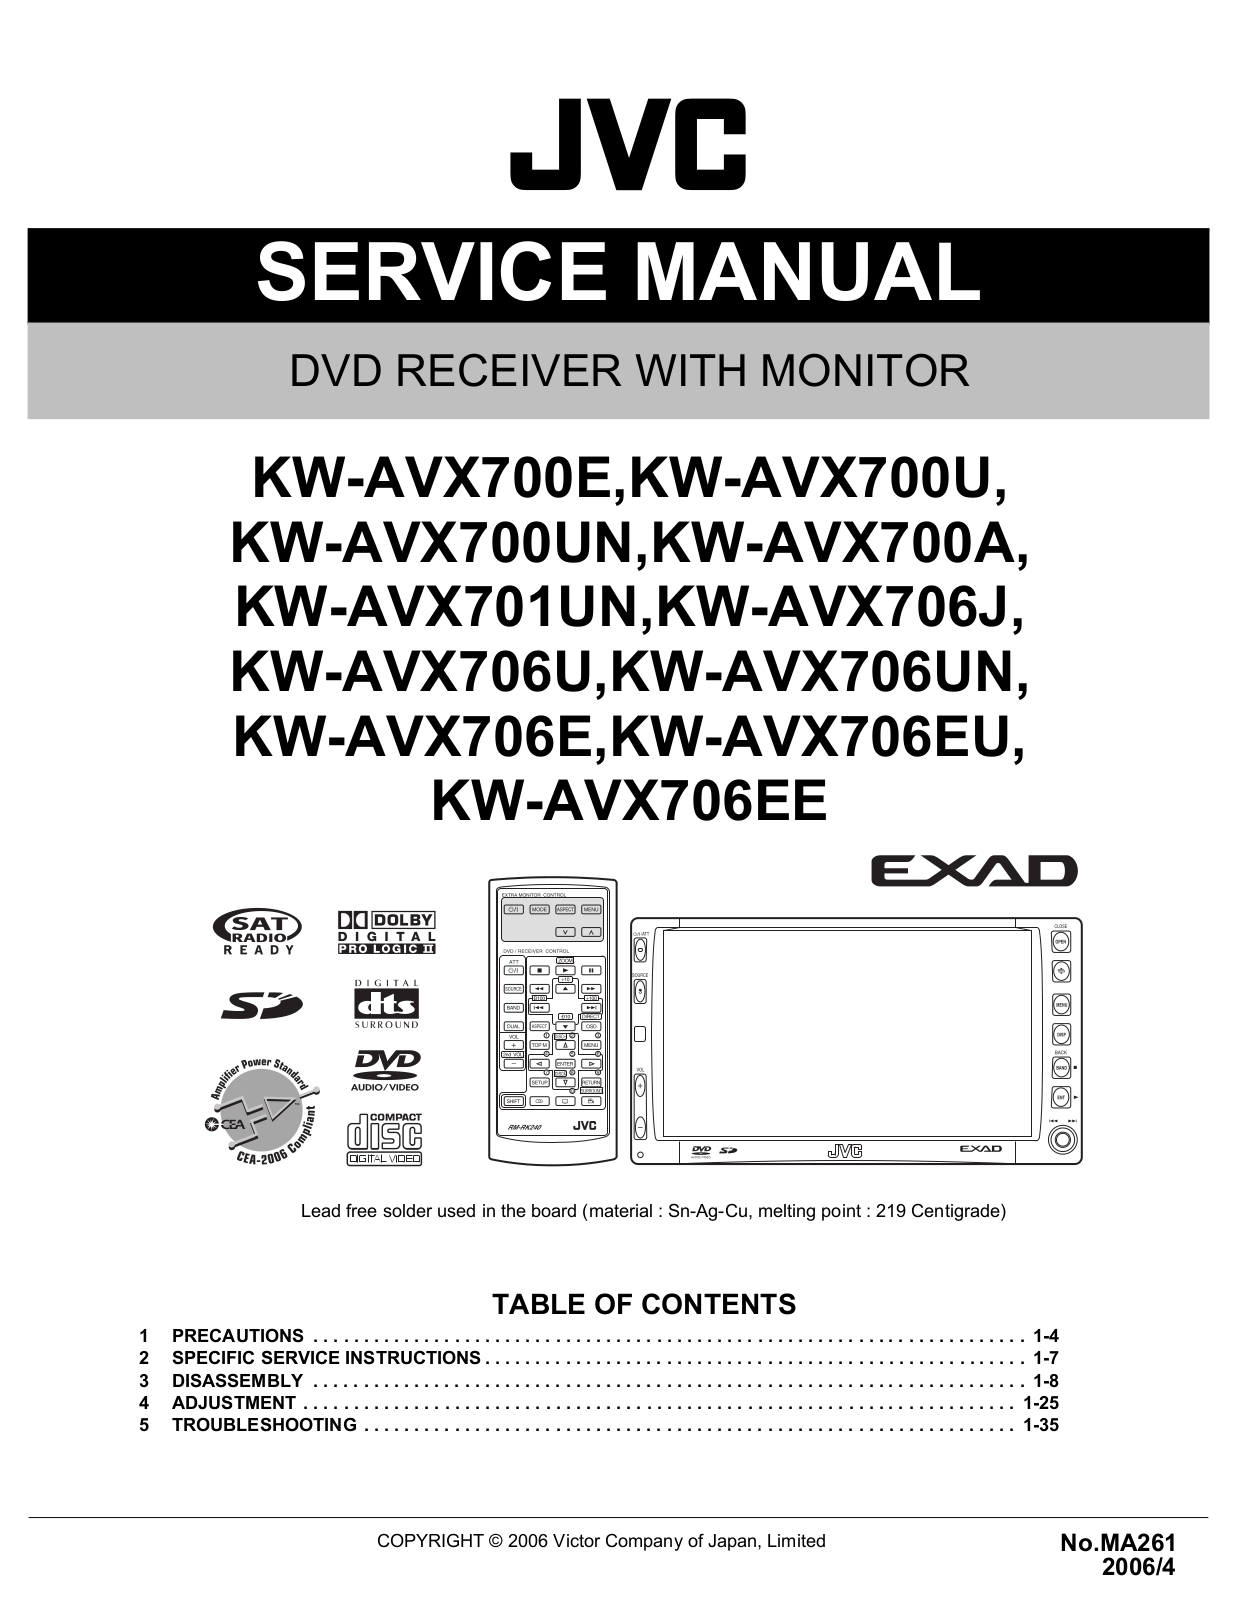 Jvc KW-AVX706-UN, KW-AVX706-U, KW-AVX706-J, KW-AVX706-EU, KW-AVX706-EE Service Manual